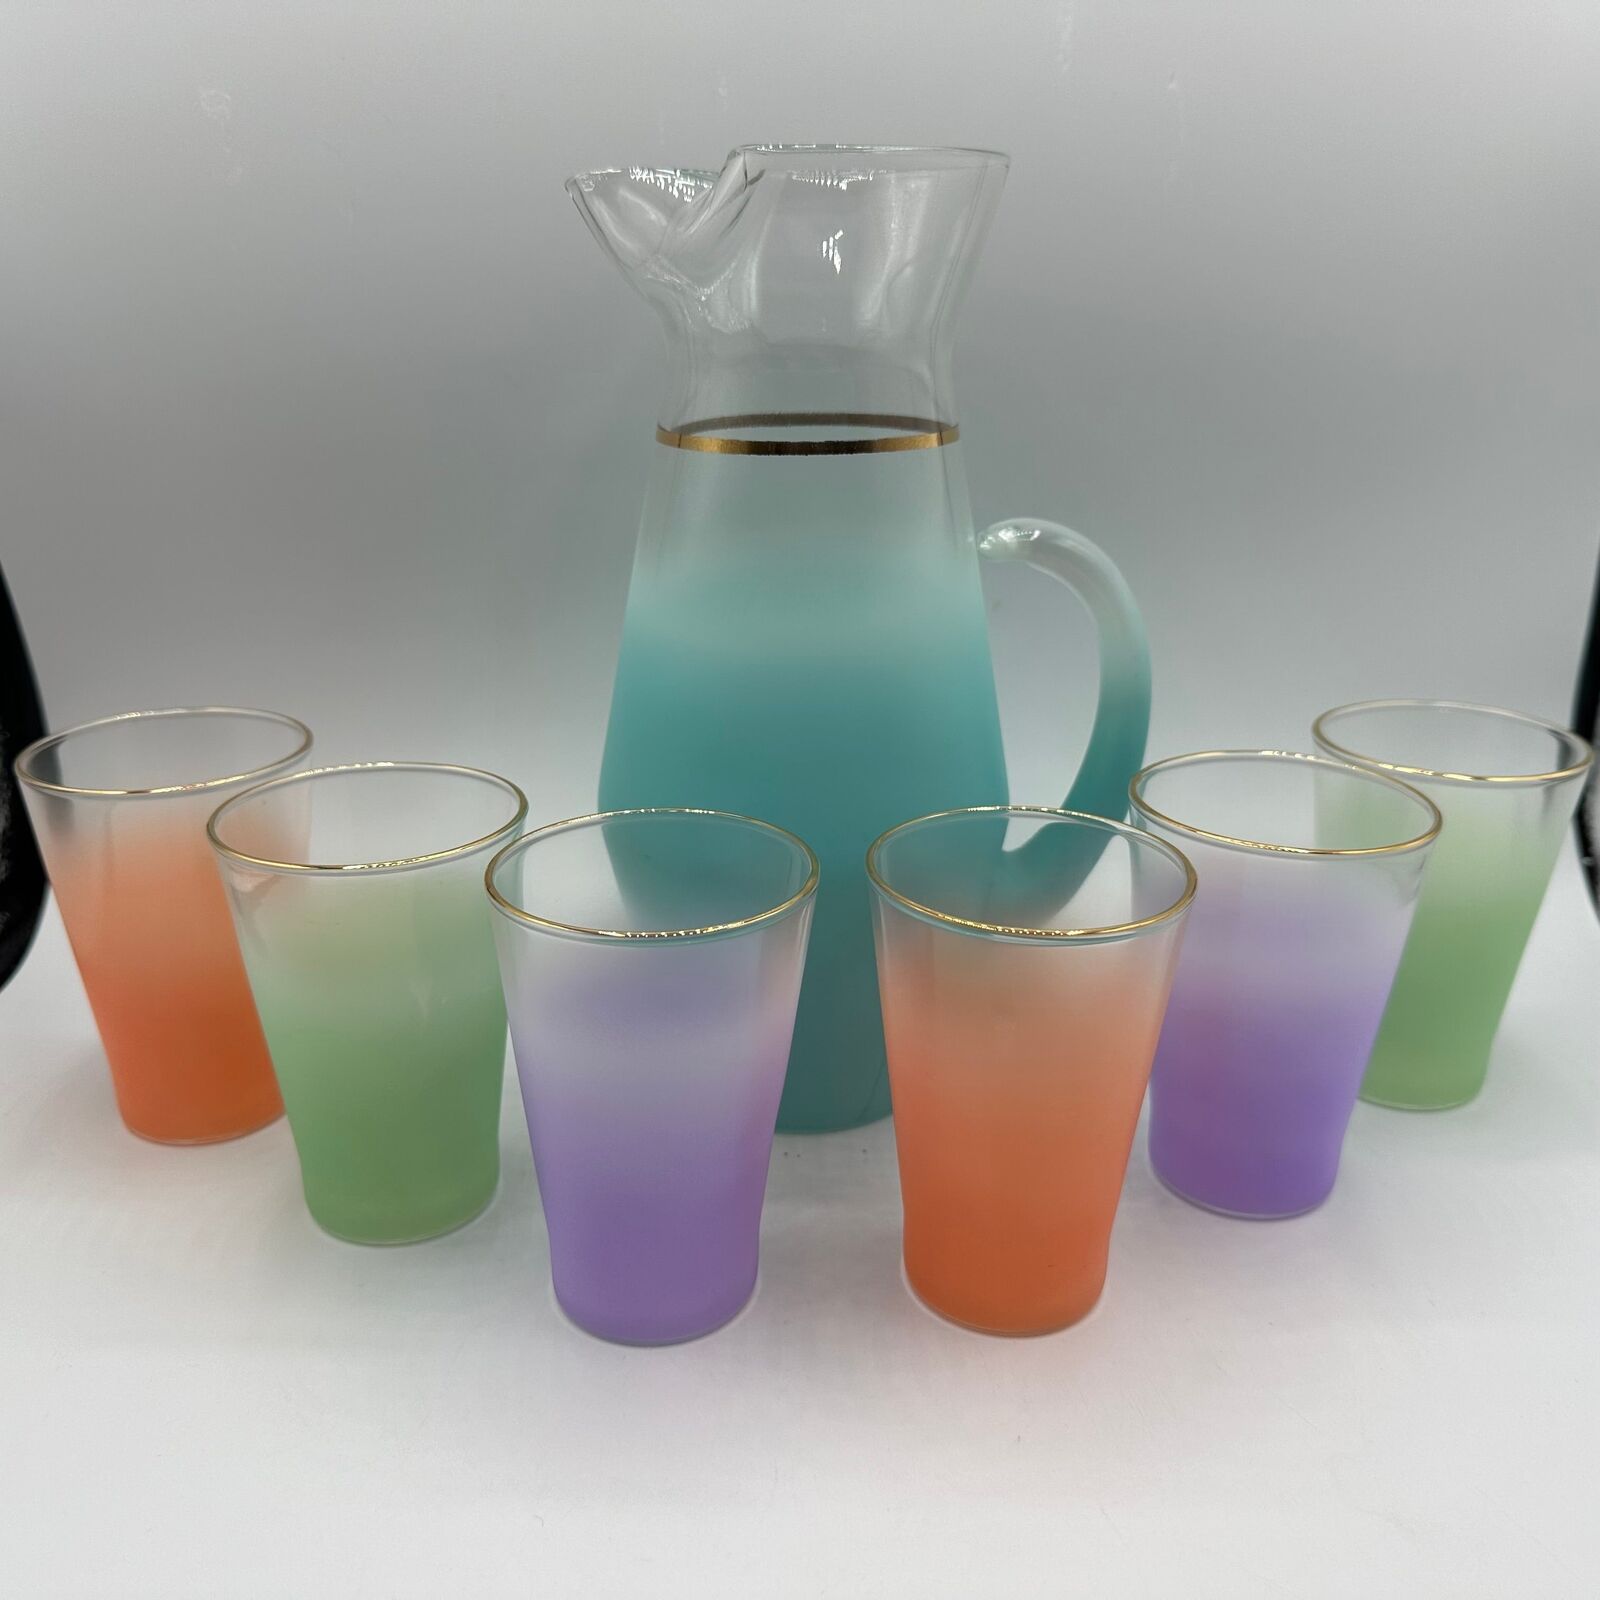 Blendo Blue Pitcher and 6 glasses- 2 purple, 2 orange, 2 green